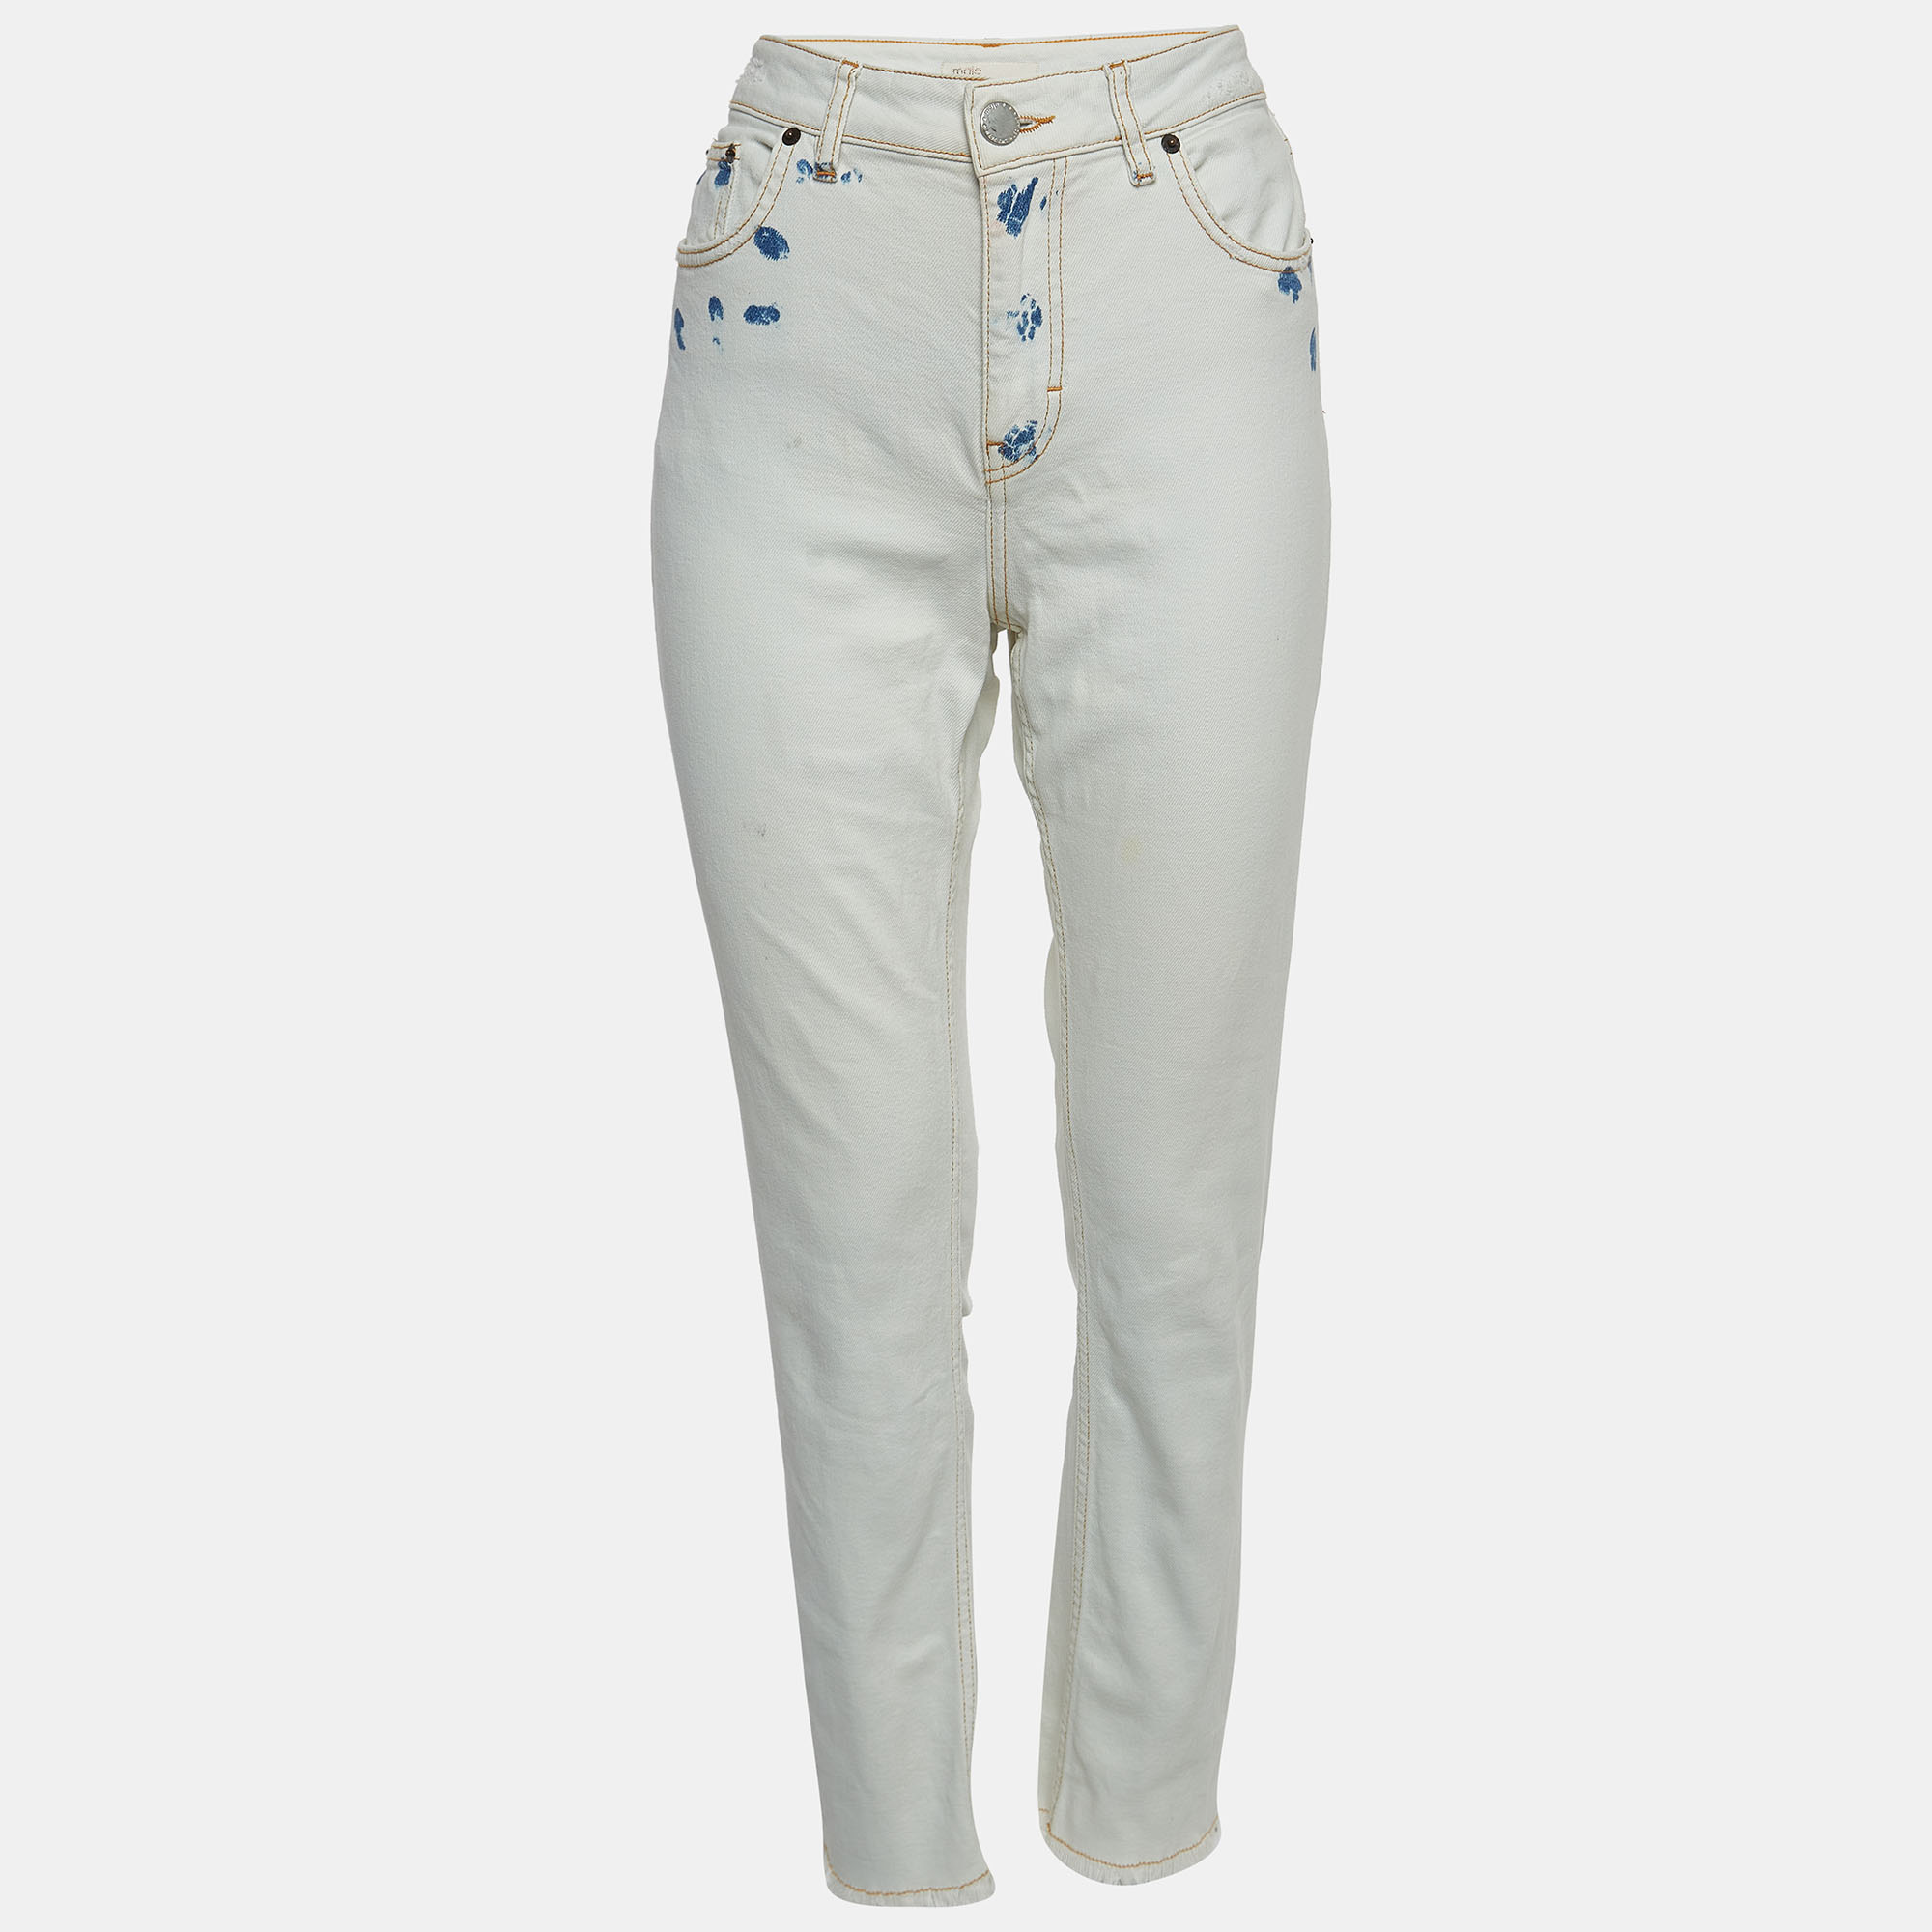 Maje white denim raw edge detail jeans s waist 30''